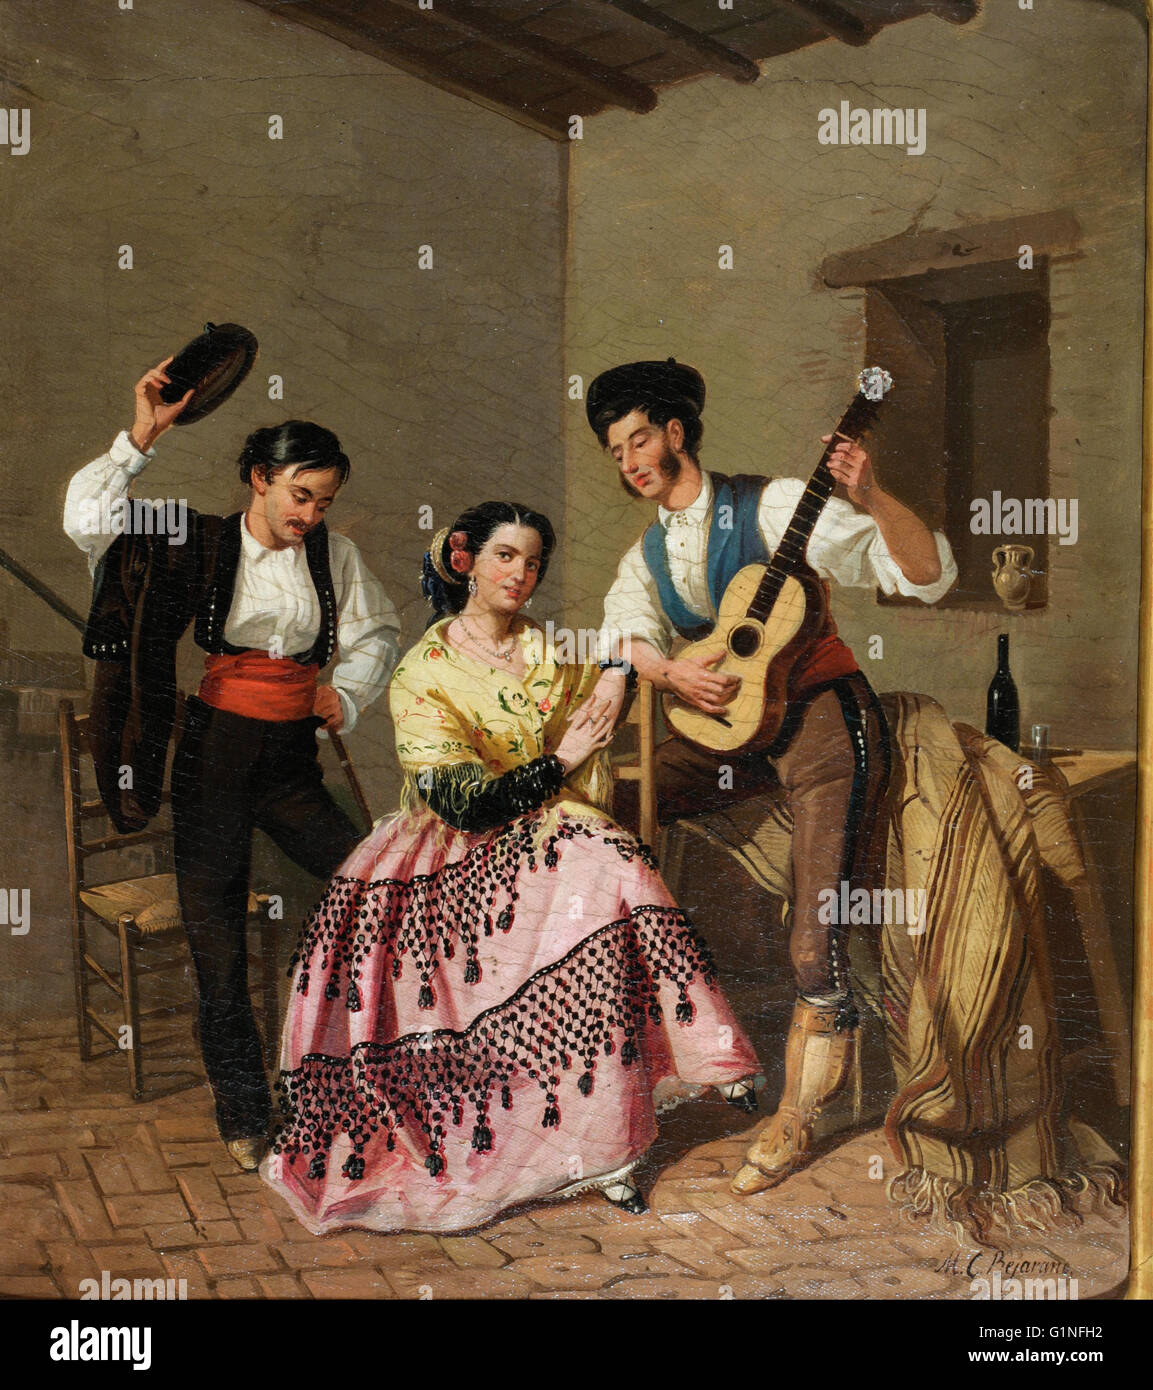 Manuel Cabral - La copla - Museo del Romanticismo, Madrid Stock Photo